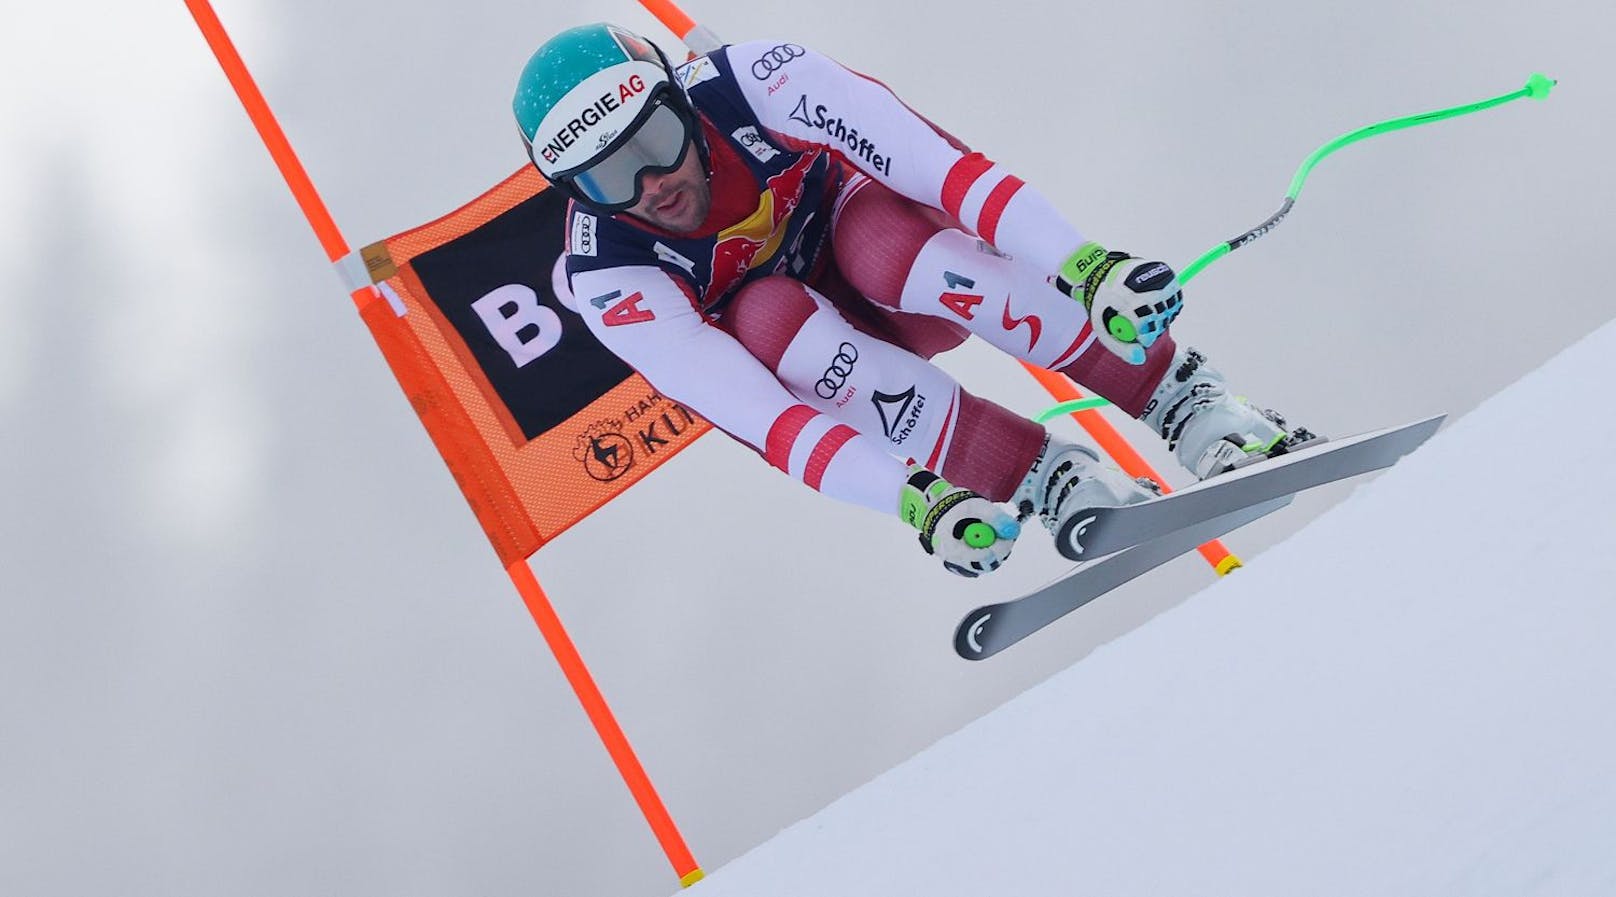 Ski Alpin: Vincent Kriechmayr